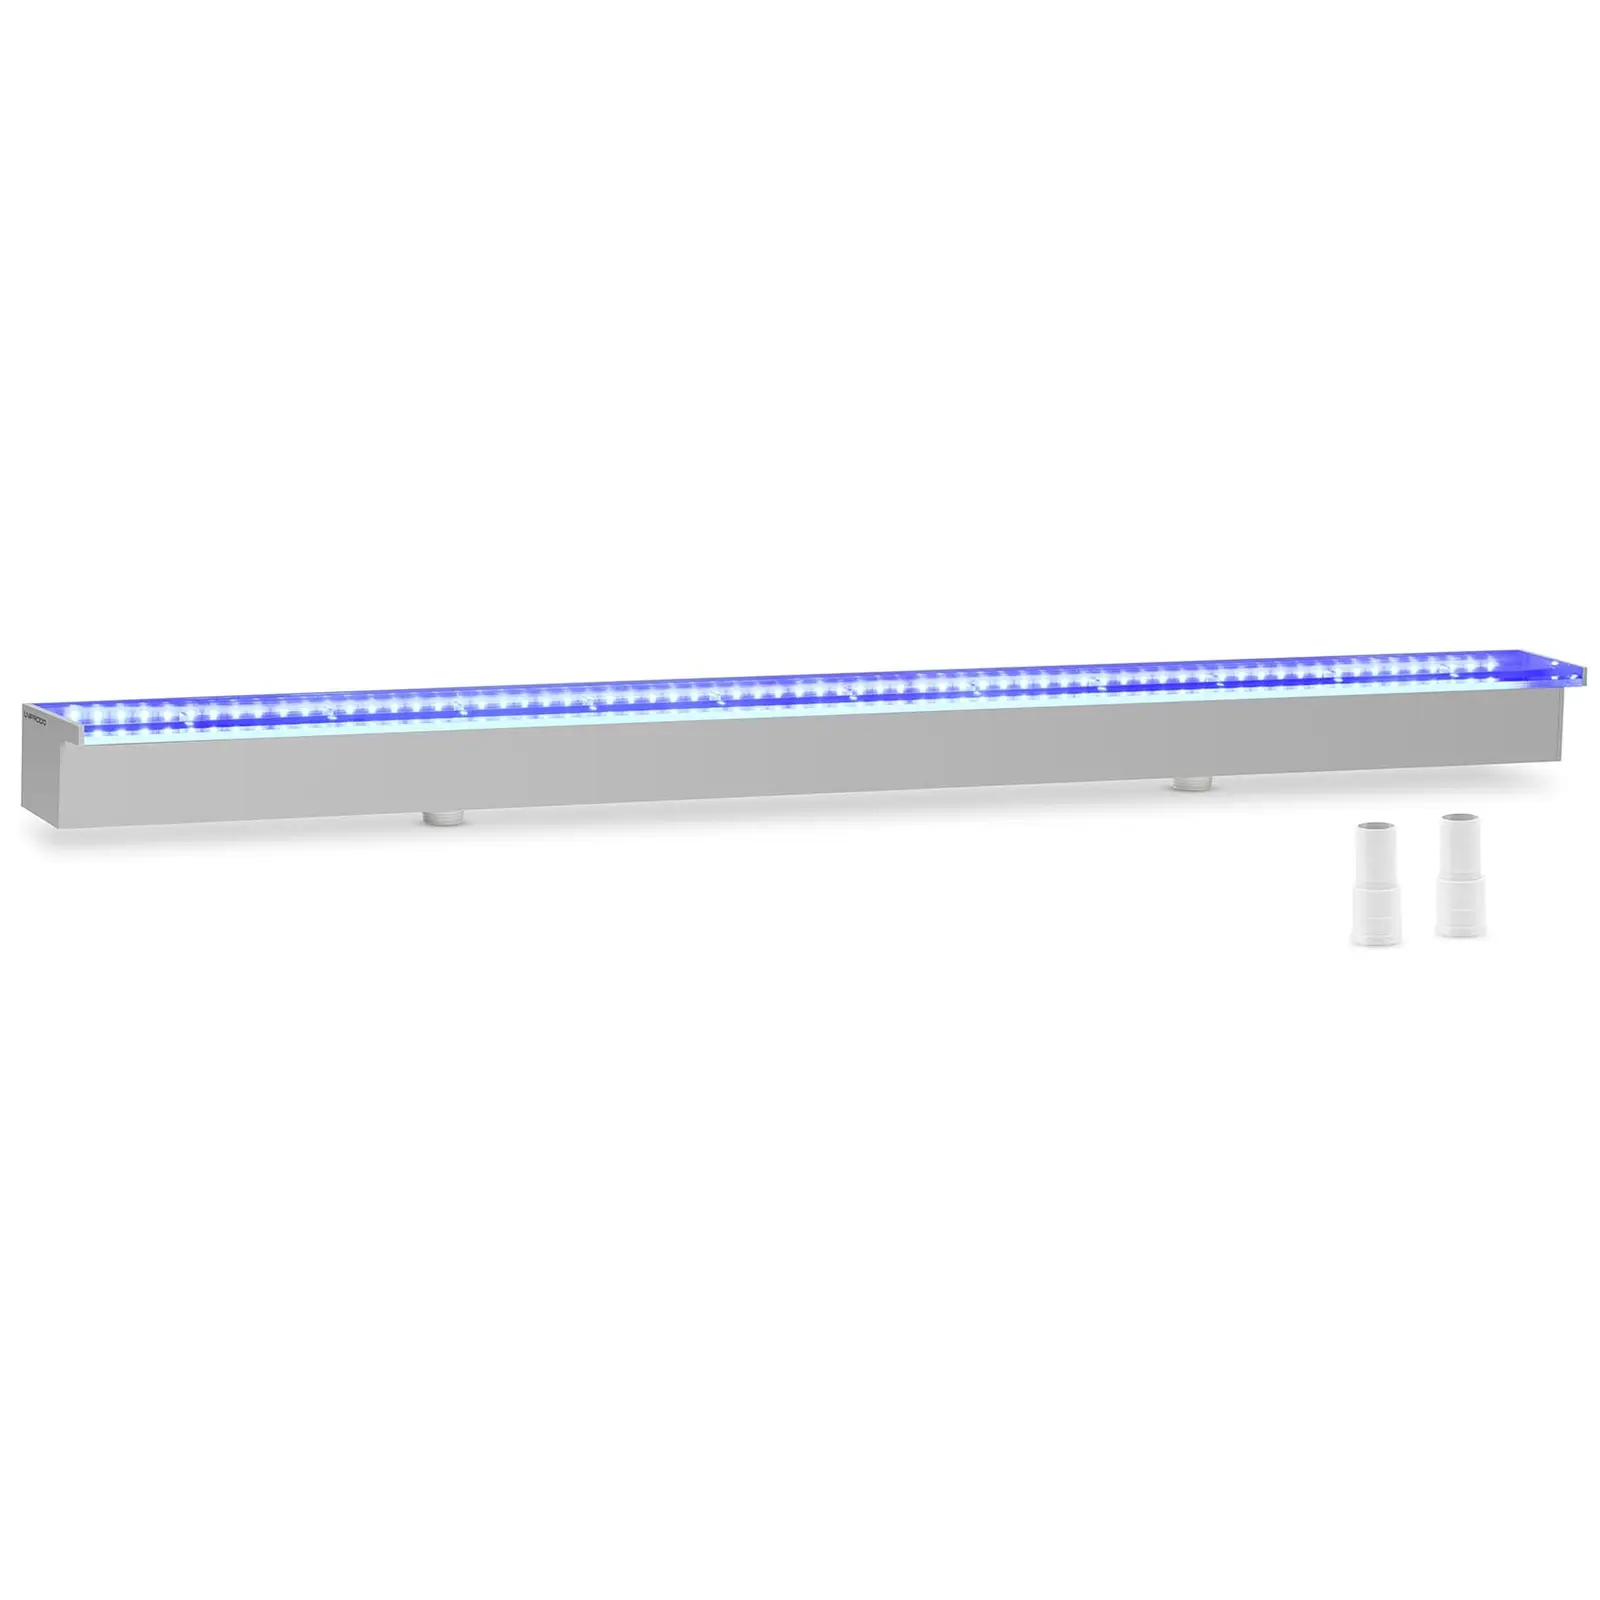 Cascata da giardino - 120 cm - Illuminazione LED - Blu, bianca